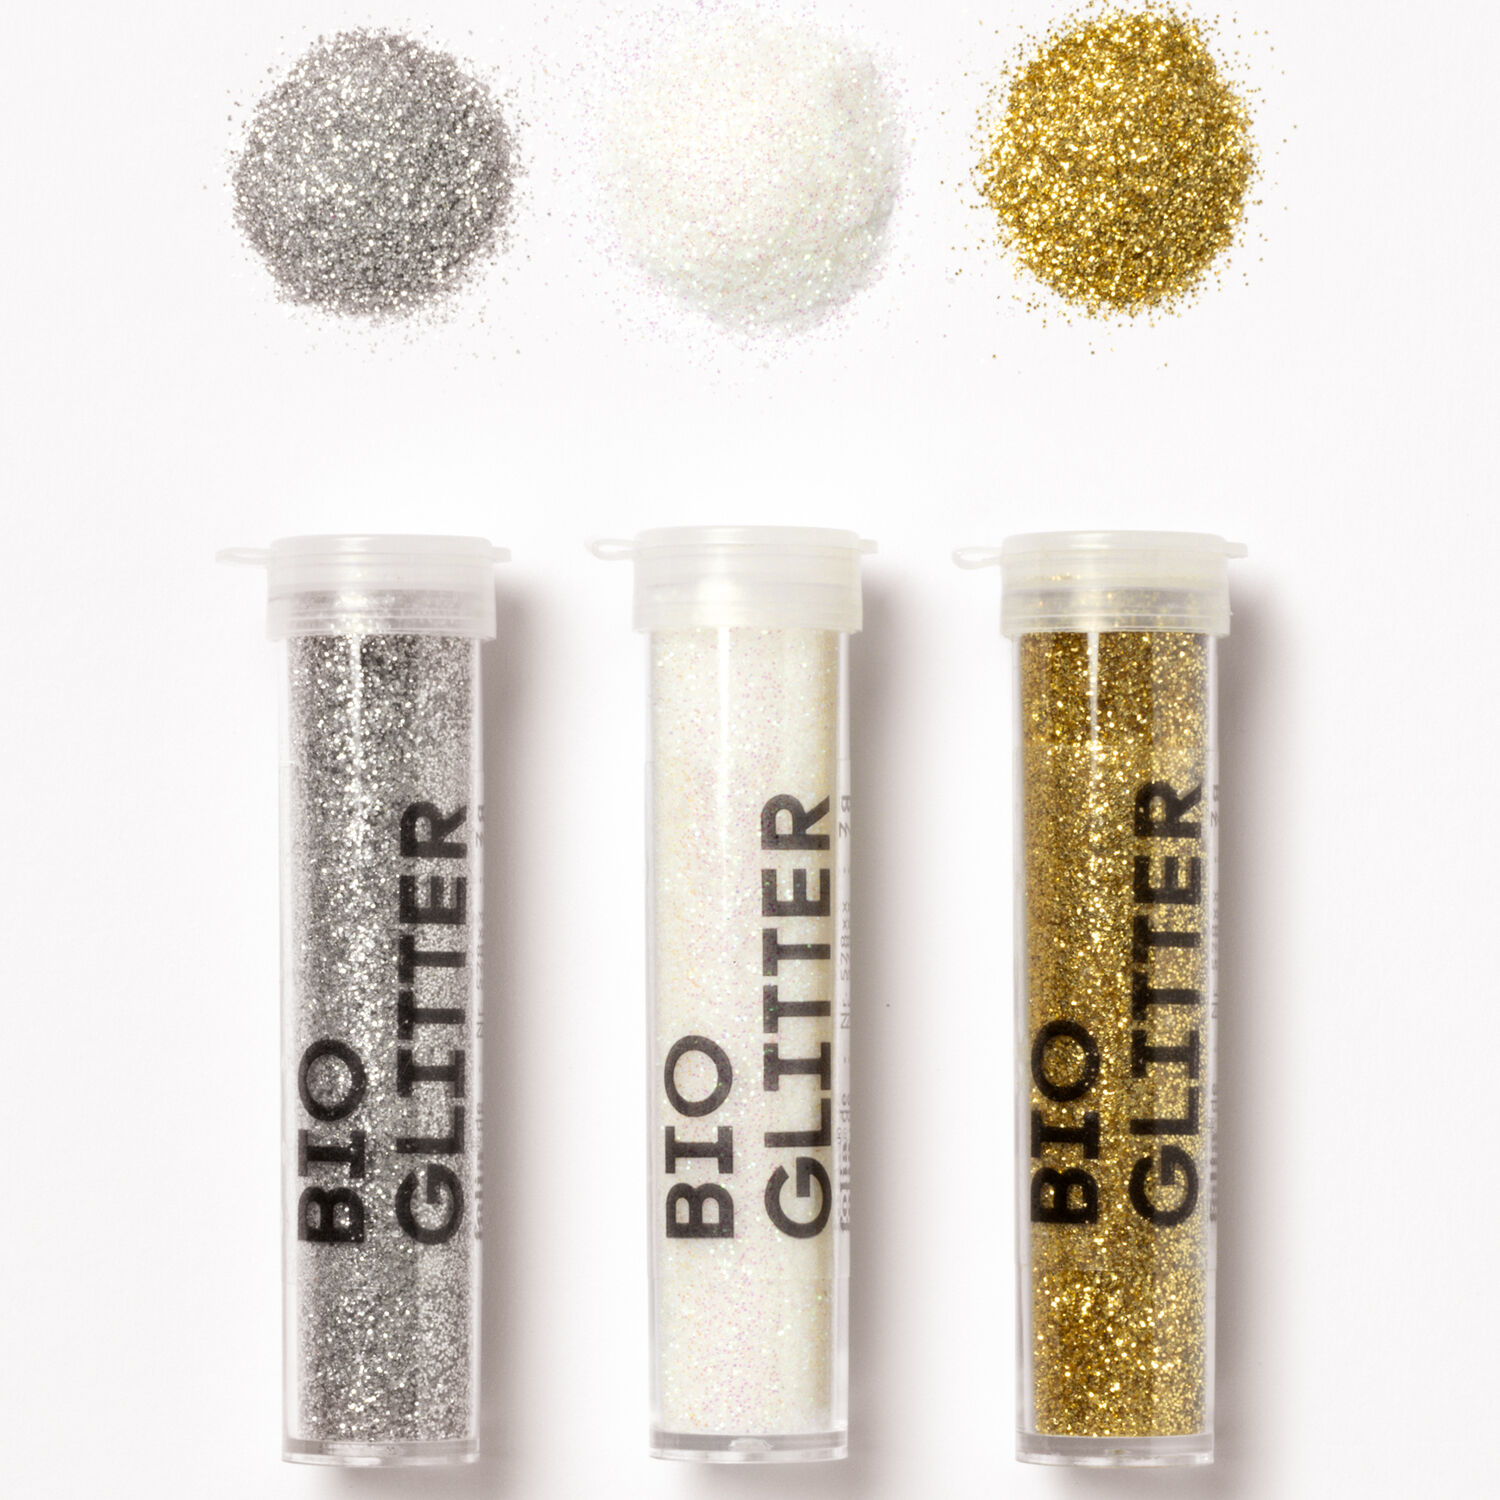 NEU Organic Bio Glitter Mix Stardust, 5x 7g, 2x gold, 2x silber, 1x wei irisierend Bild 3